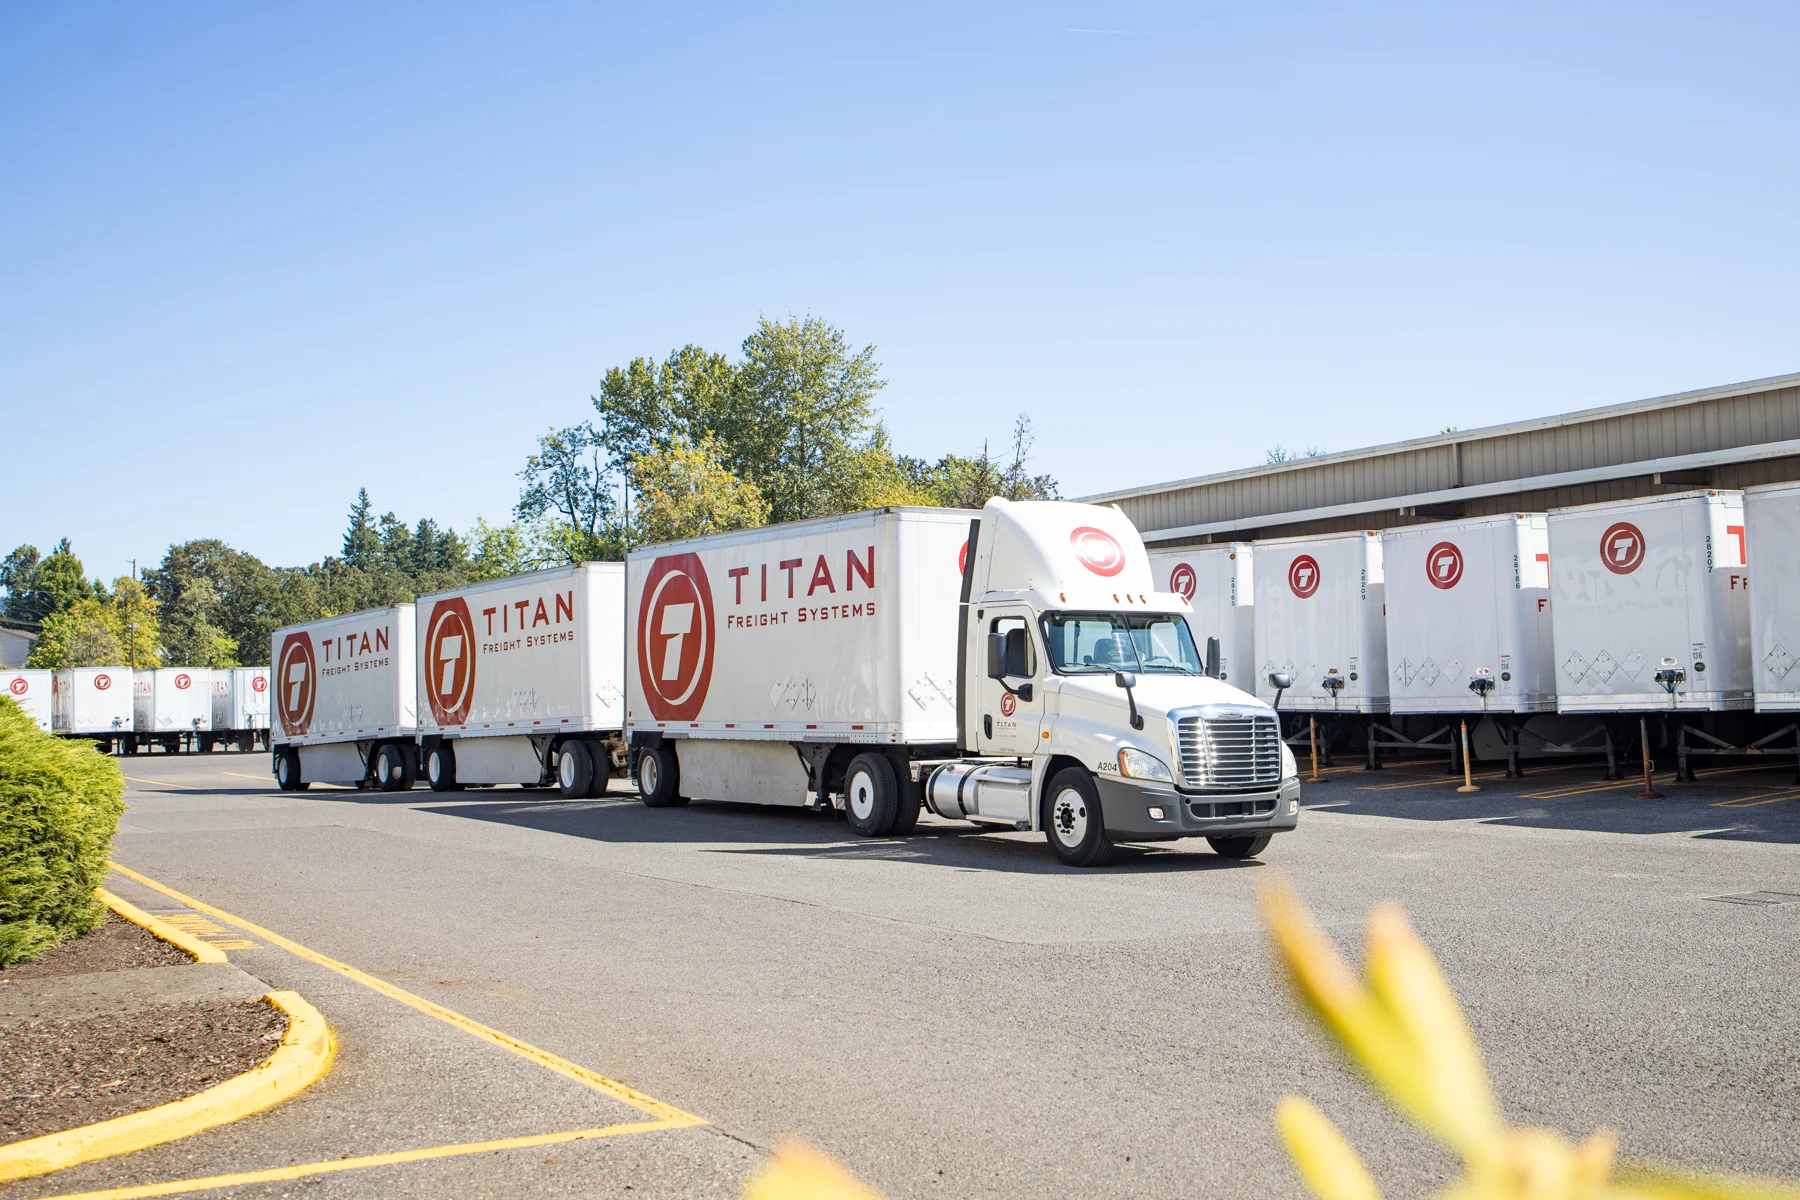 Titan Freight trucks